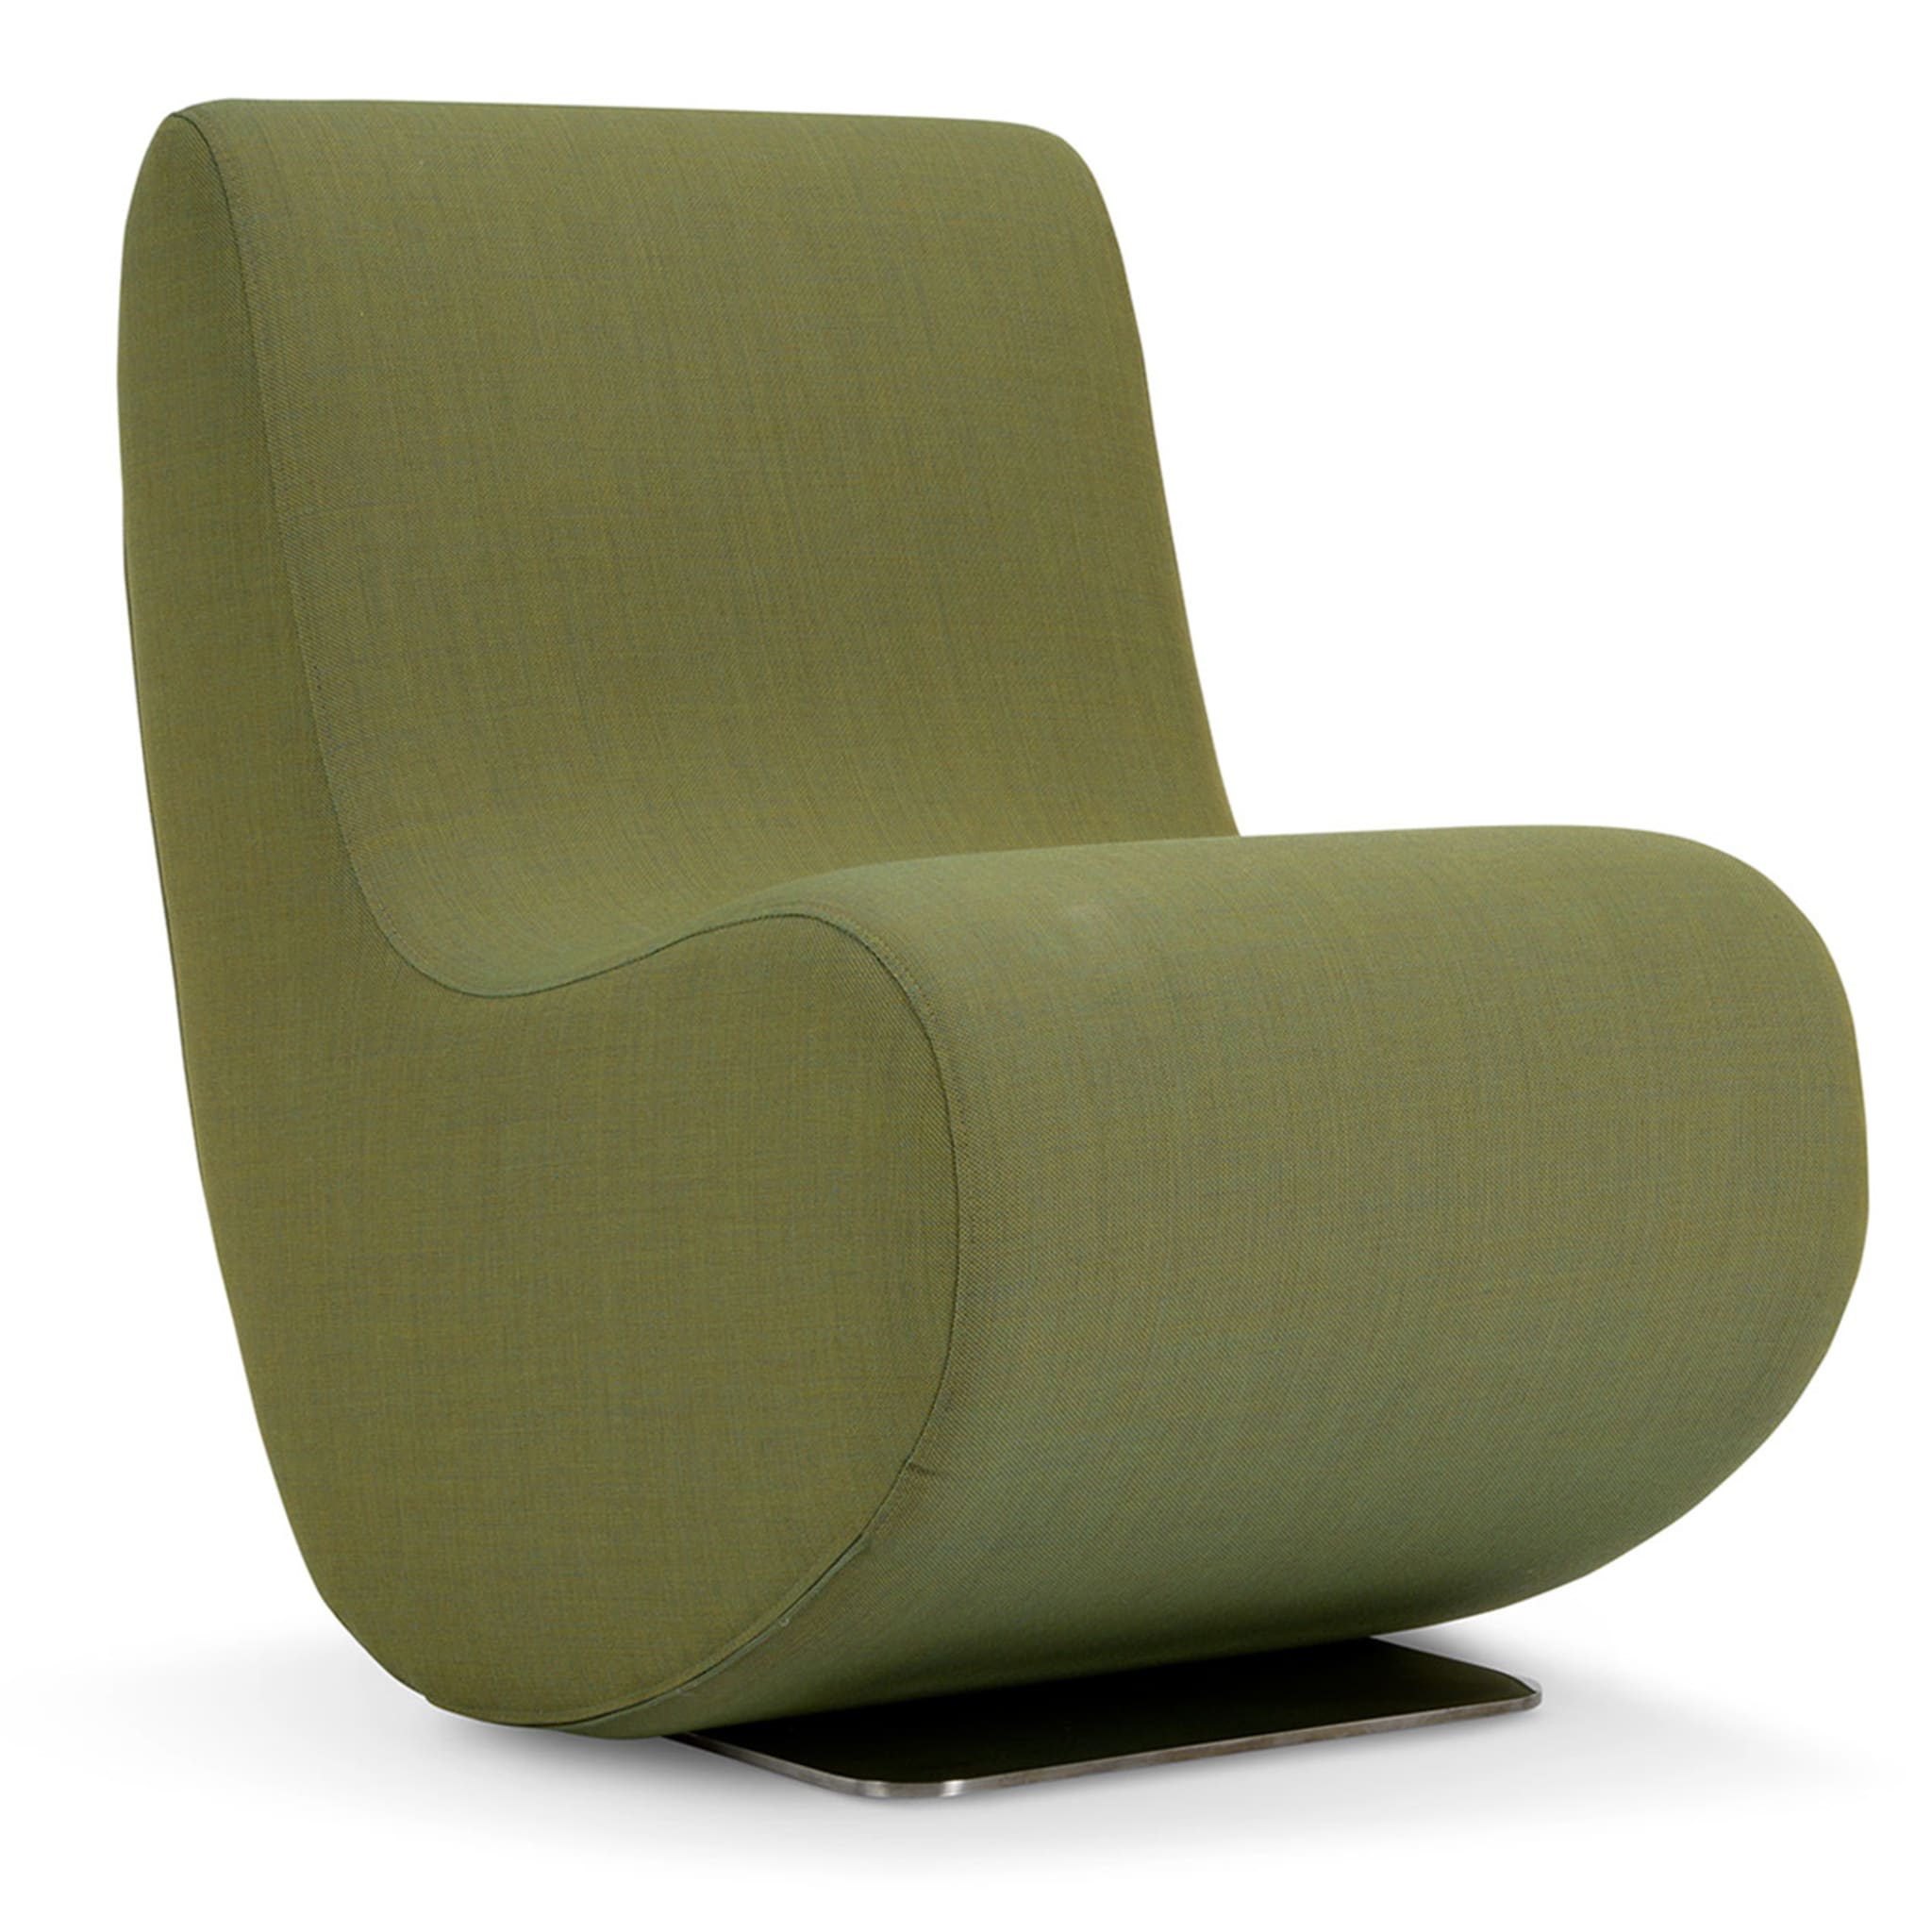 Nina Green Lounge Chair by Simone Micheli - Alternative view 1